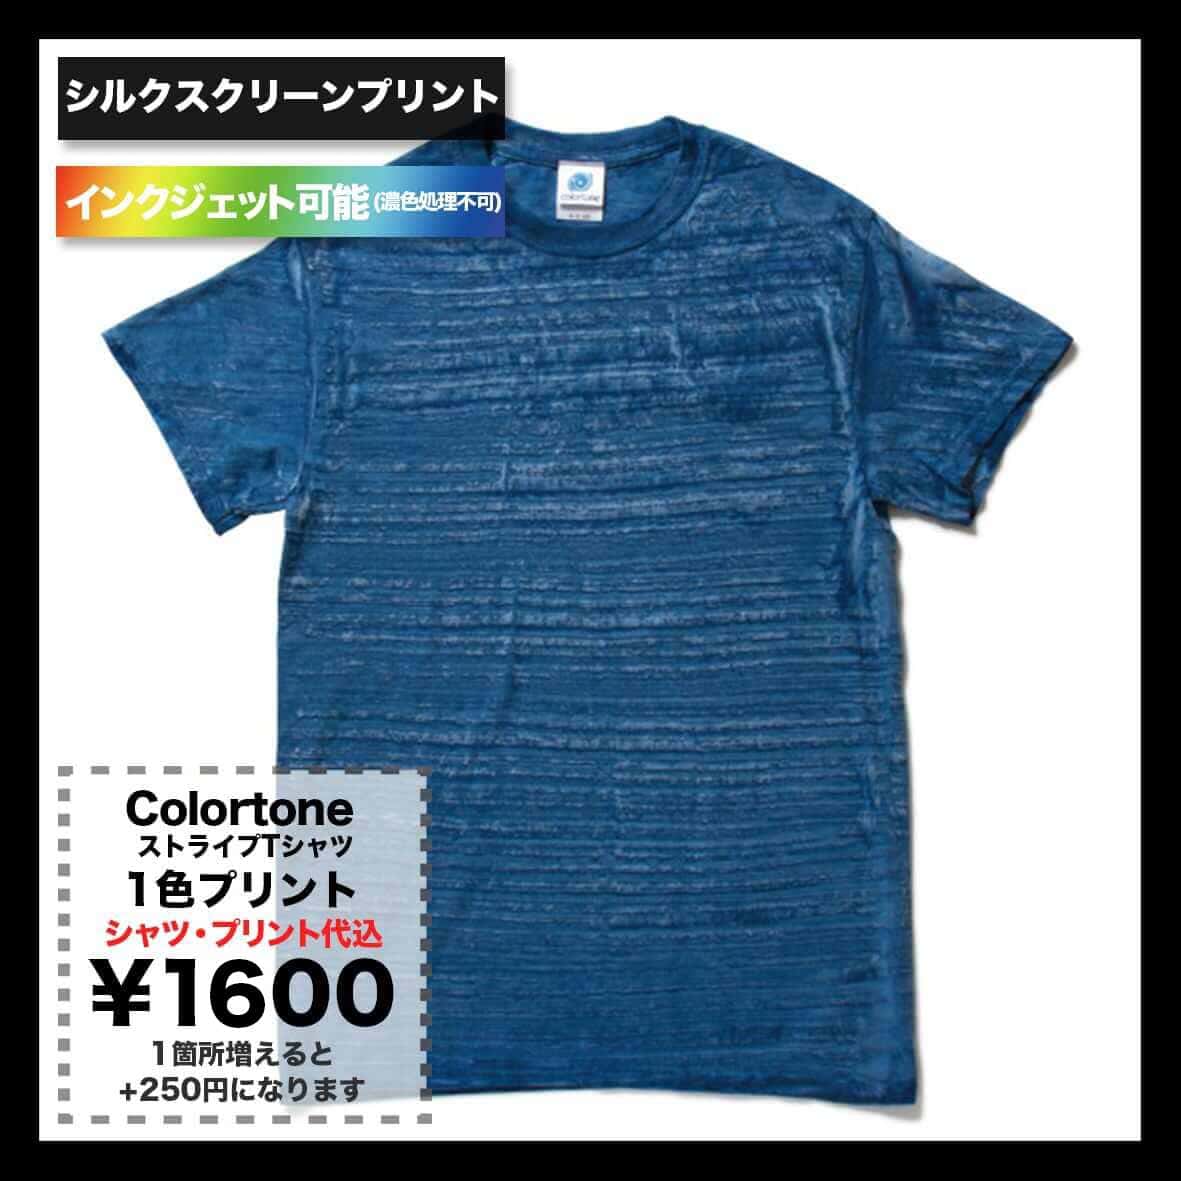 Colortone カラートーン 5.3 oz ストライプTシャツ (品番TD1375)